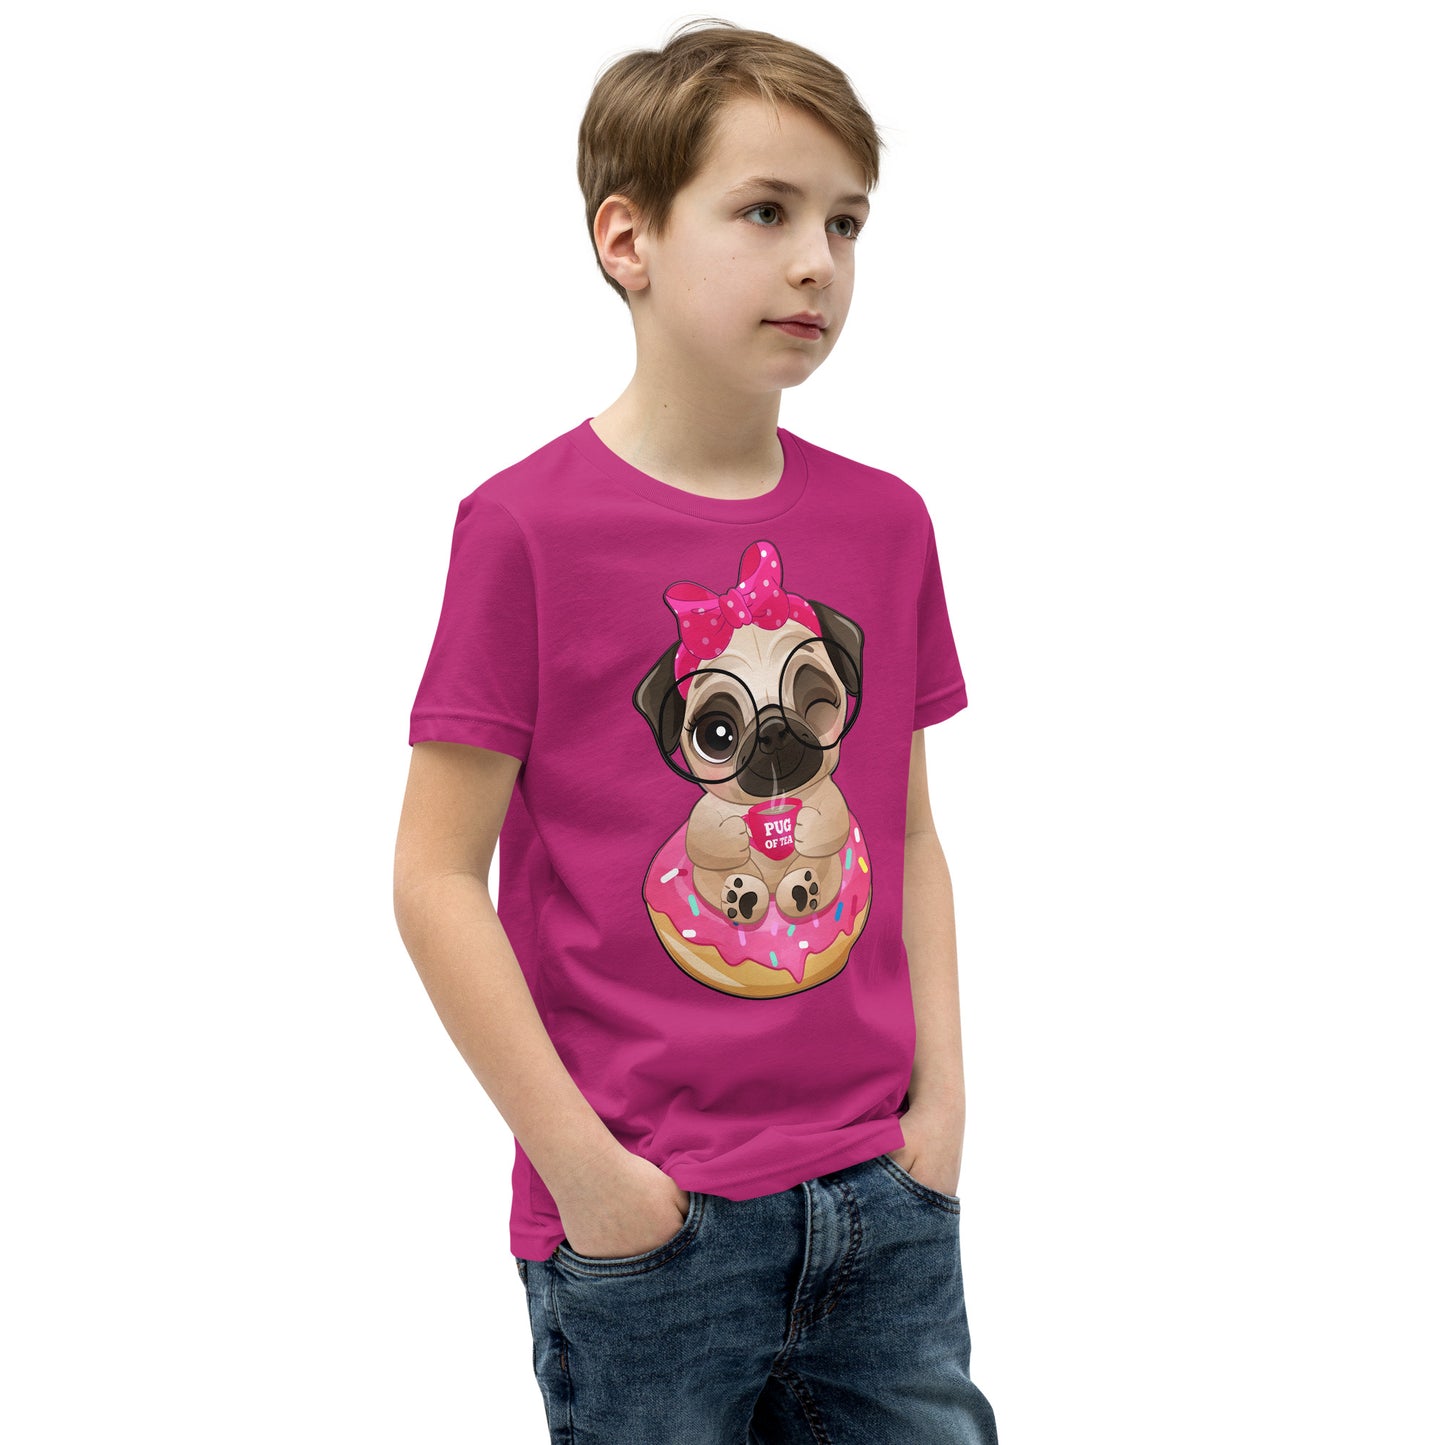 Cute Little Pug Dog Sitting in Donut T-shirt, No. 0365